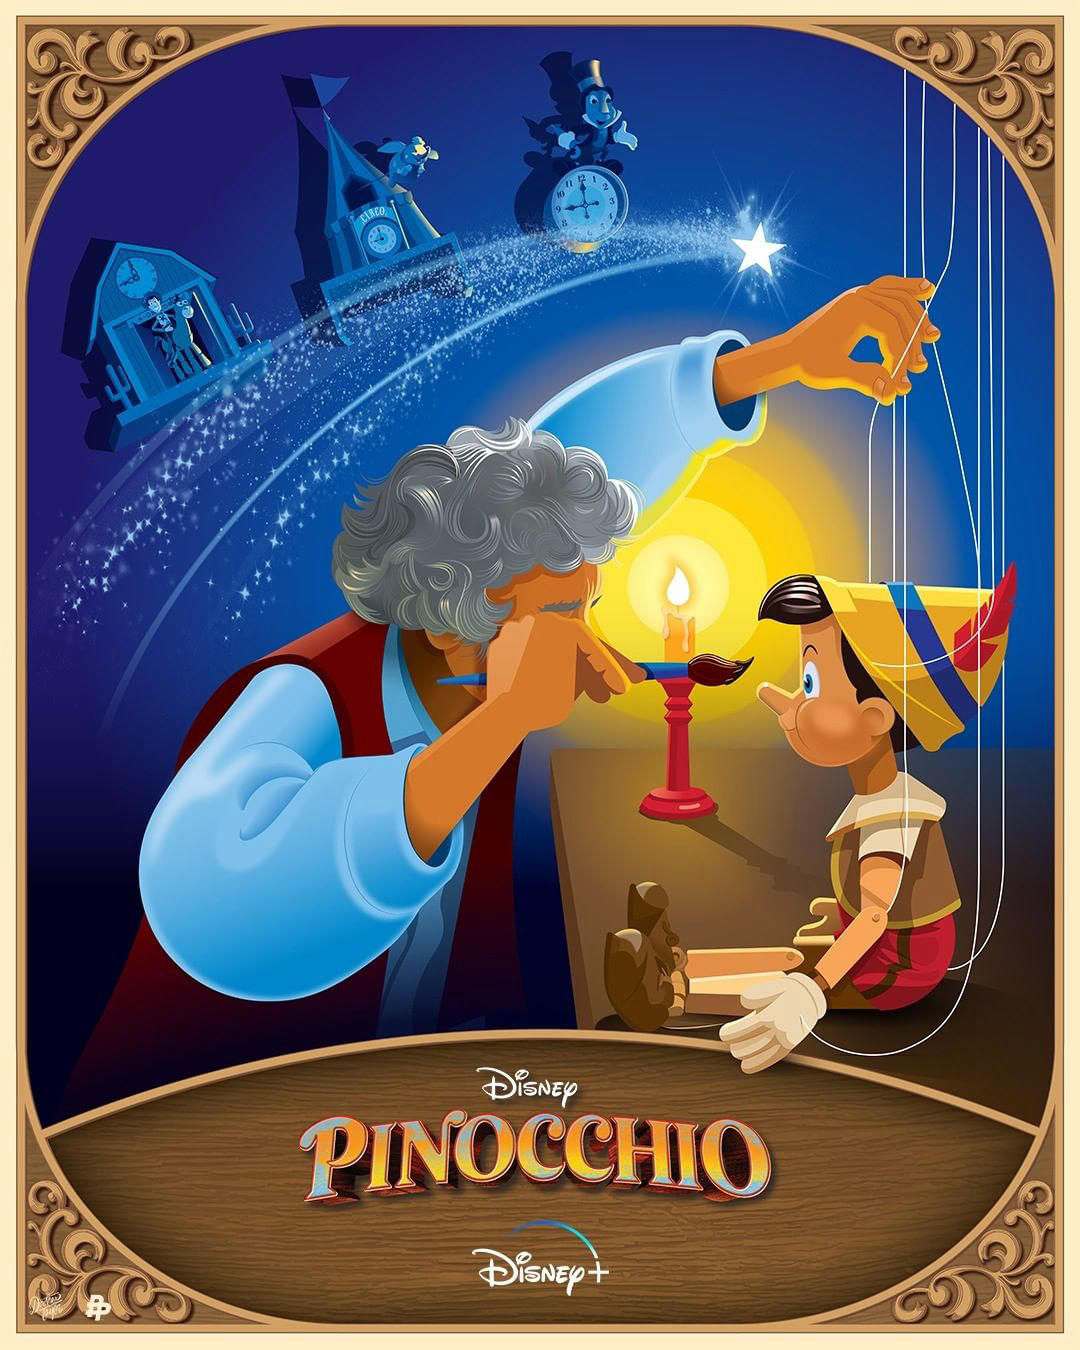 Disney+ - Art that brings the magic of #Pinocchio to life